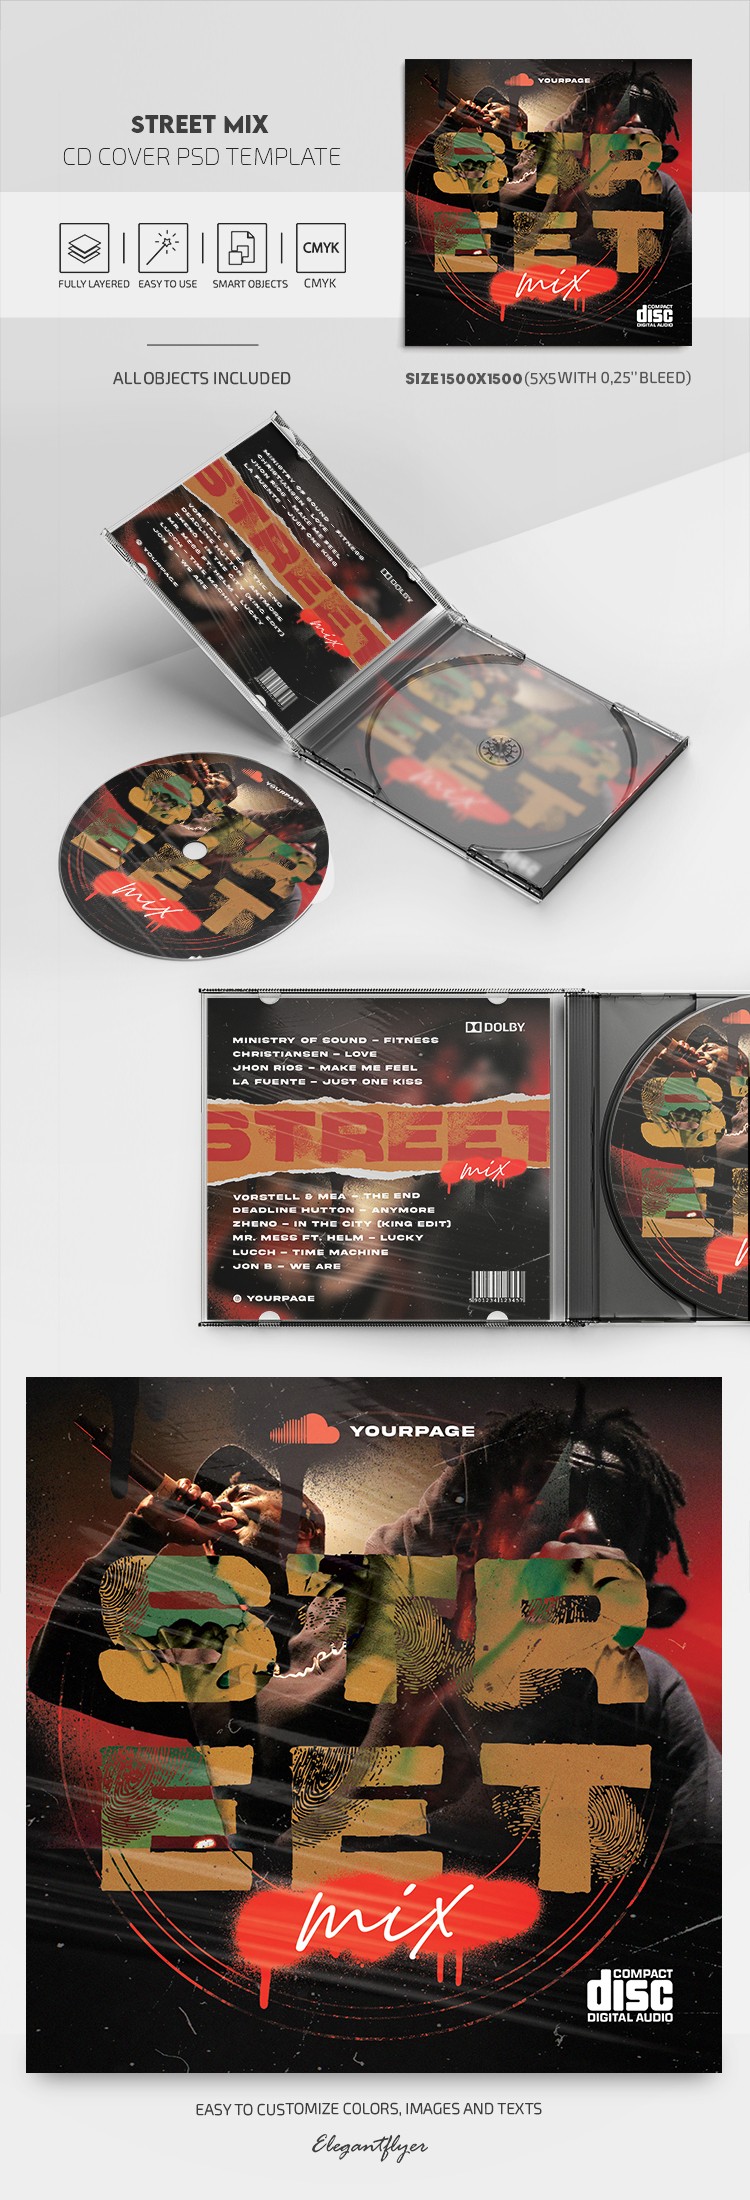 Straßenmix-CD-Cover by ElegantFlyer